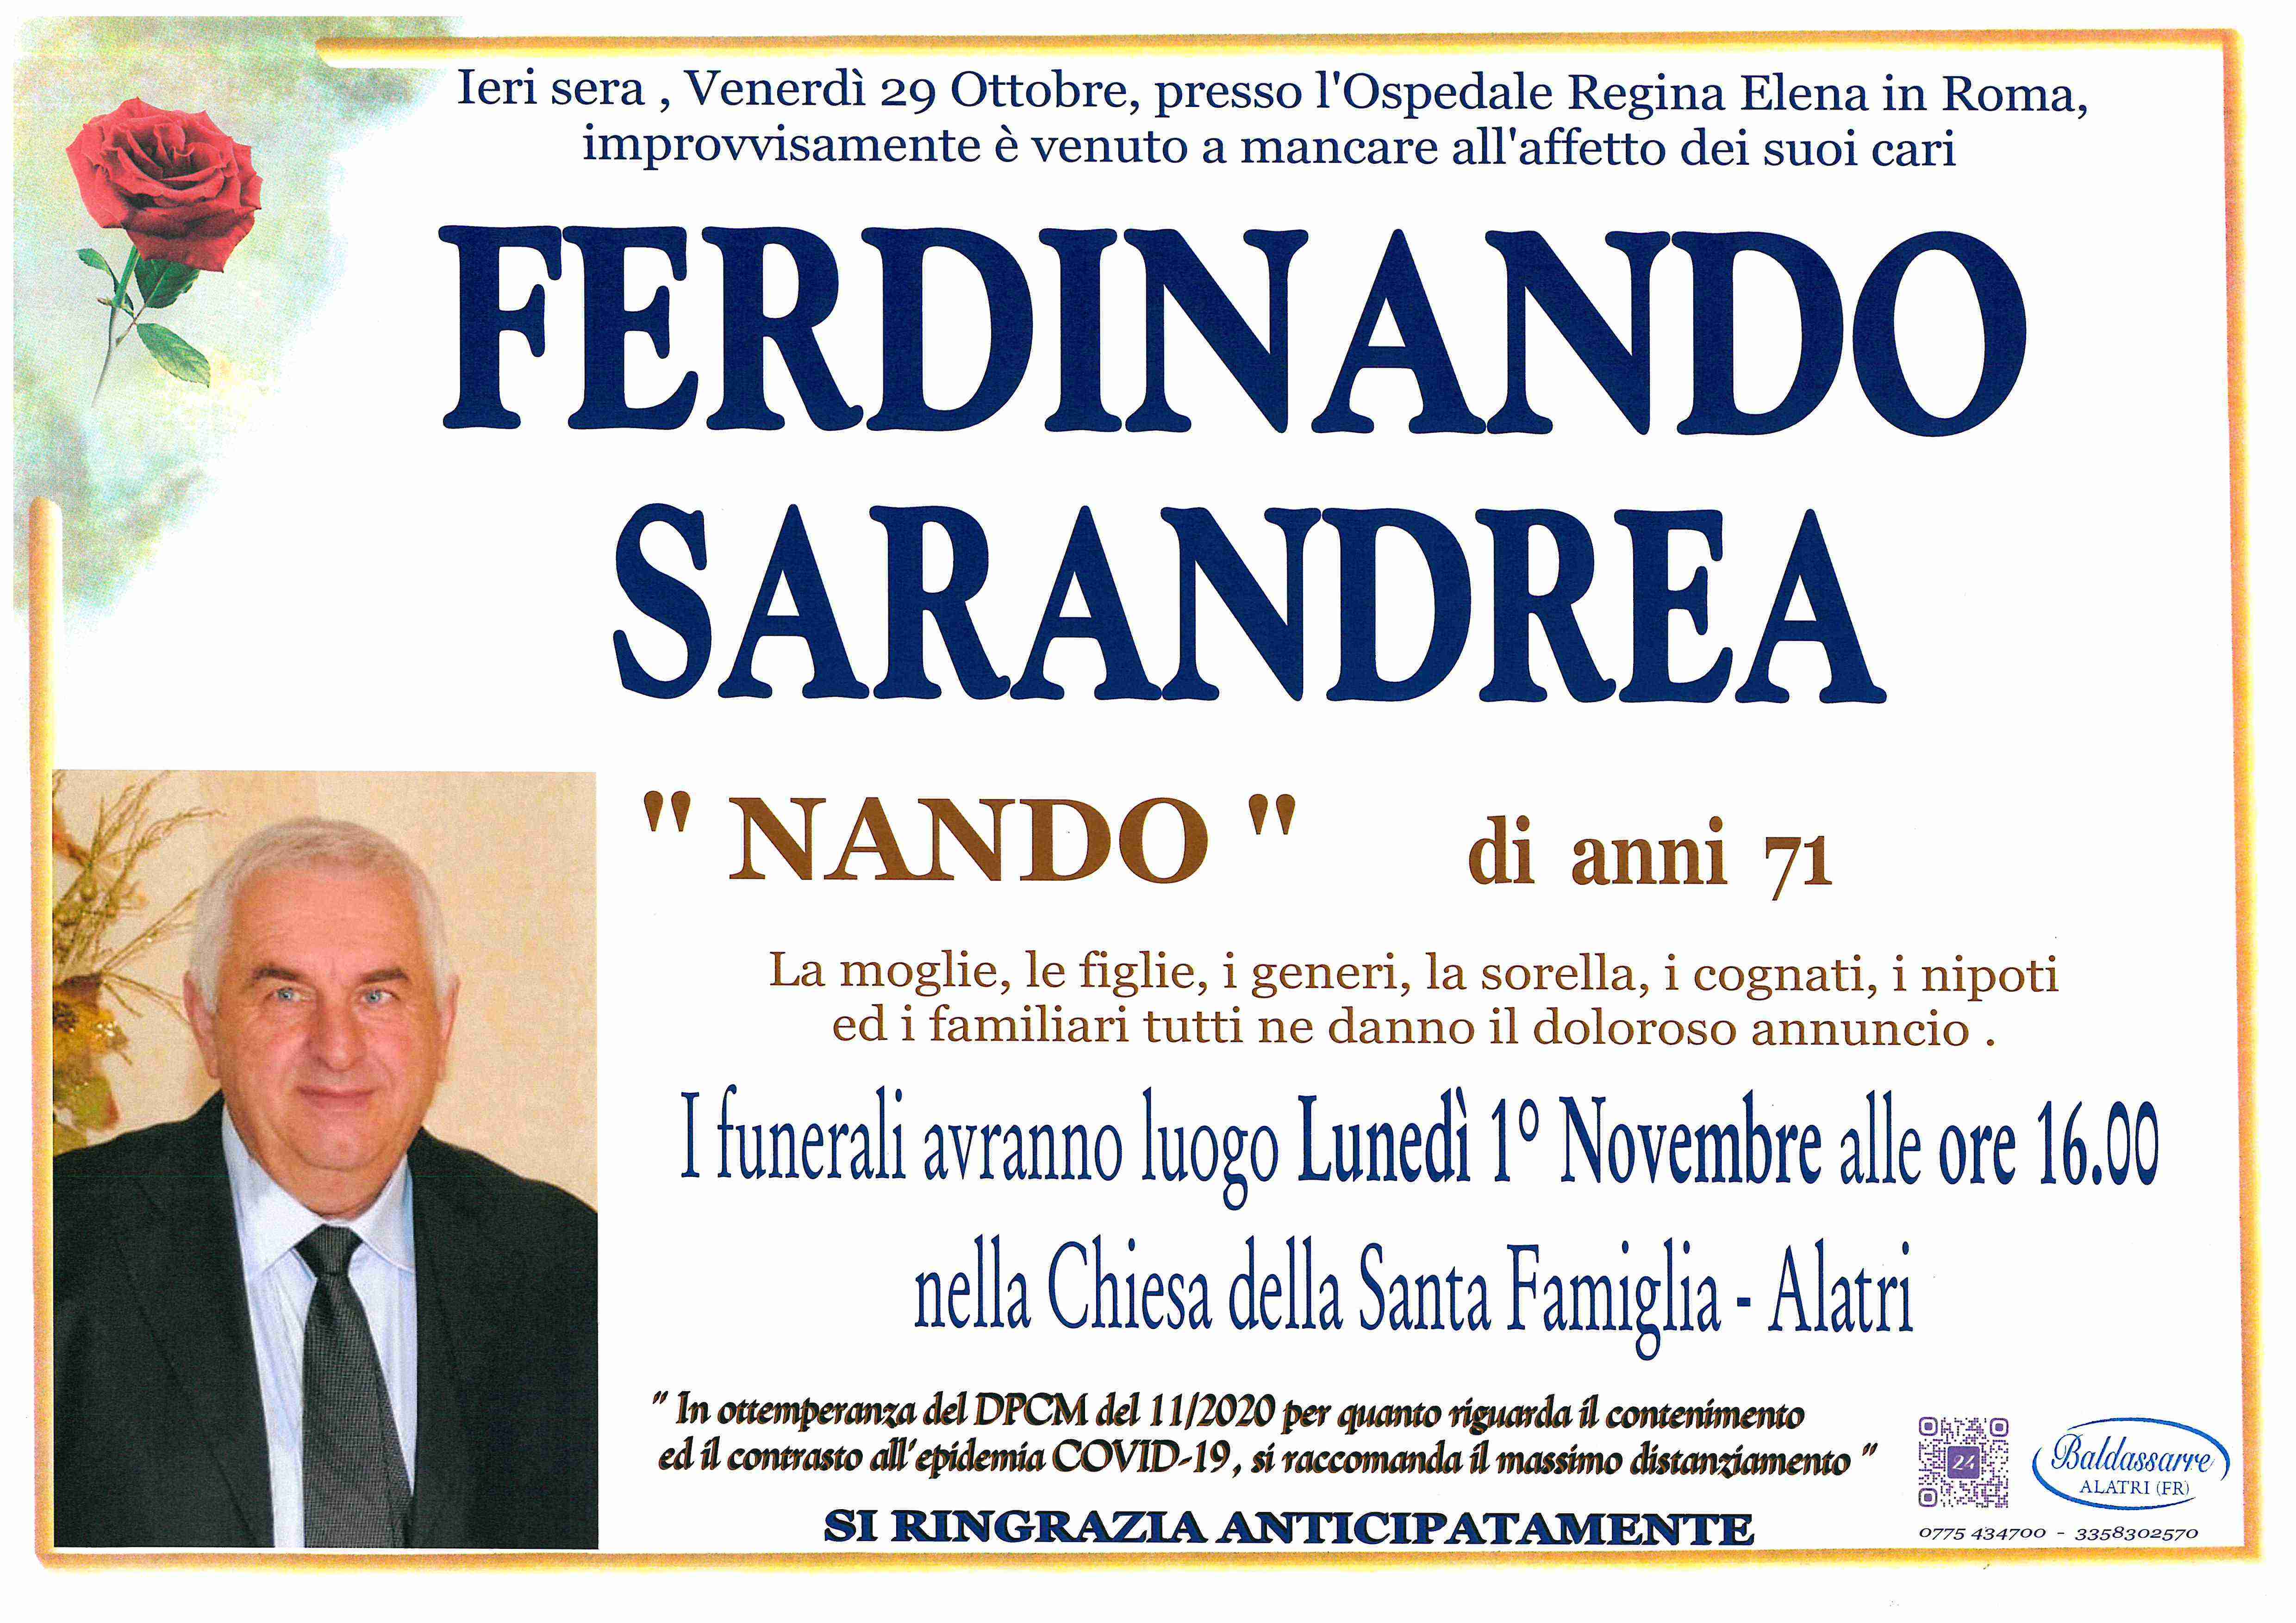 Ferdinando Sarandrea